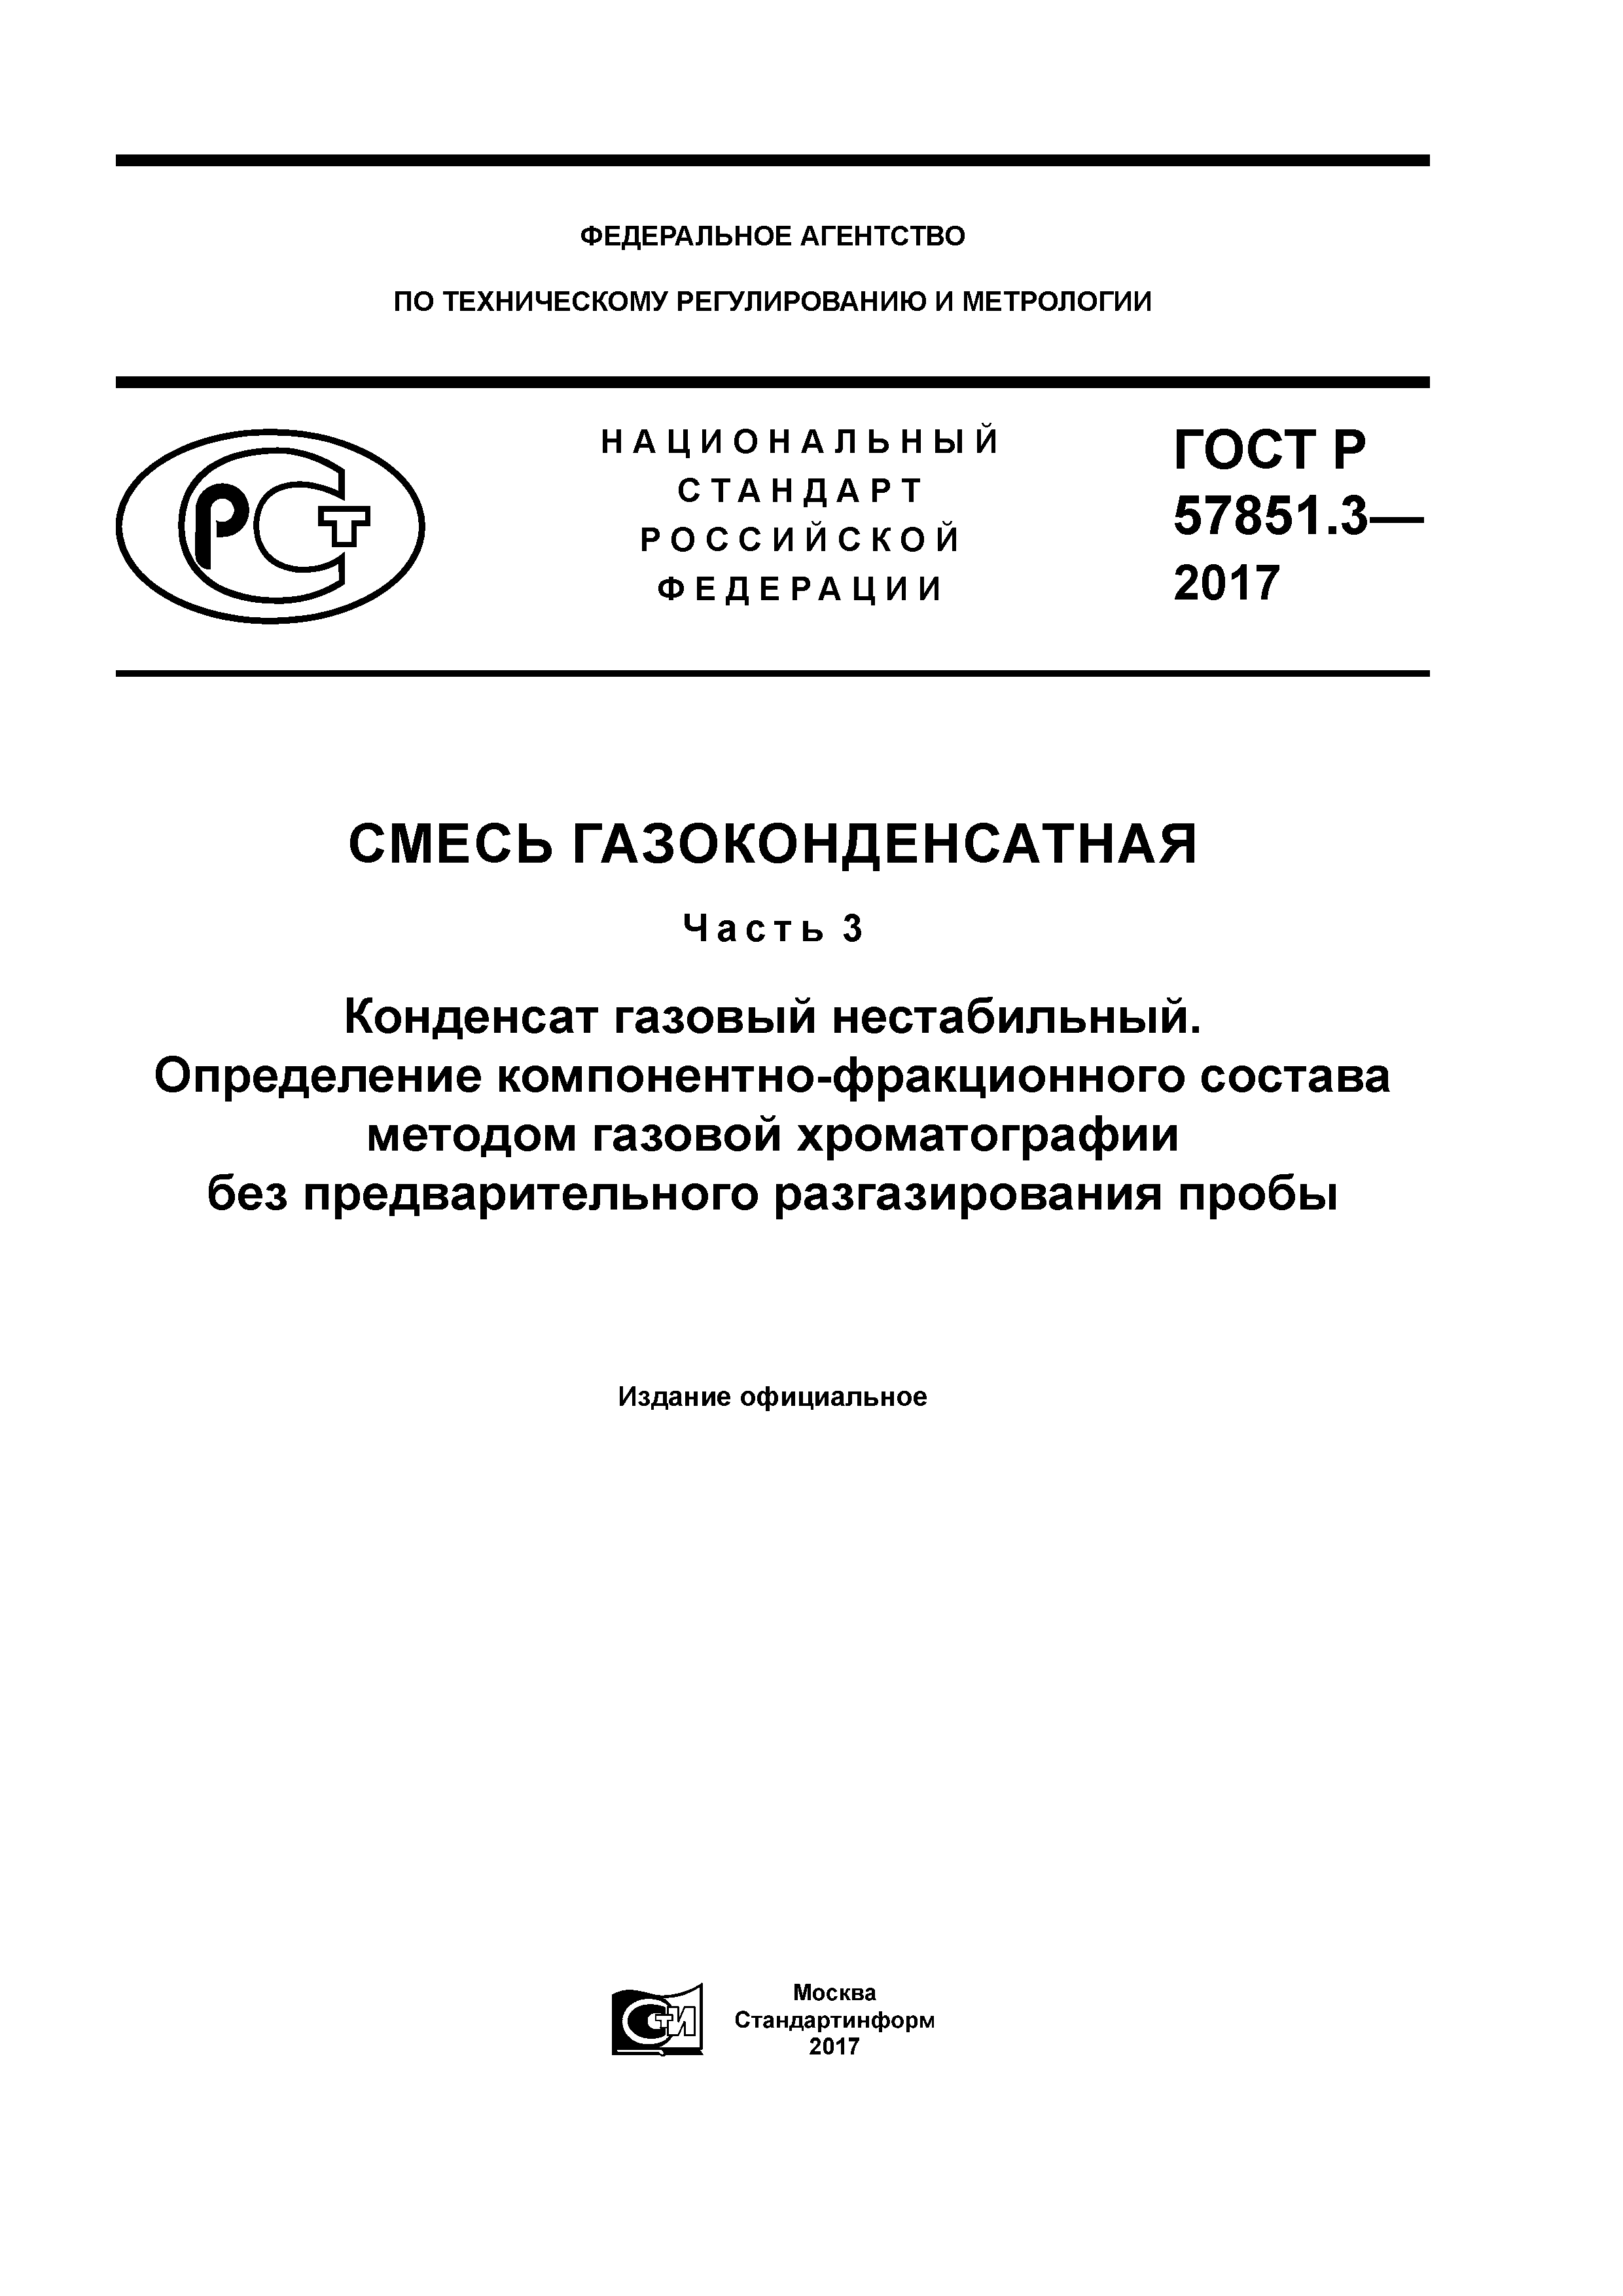 ГОСТ Р 57851.3-2017